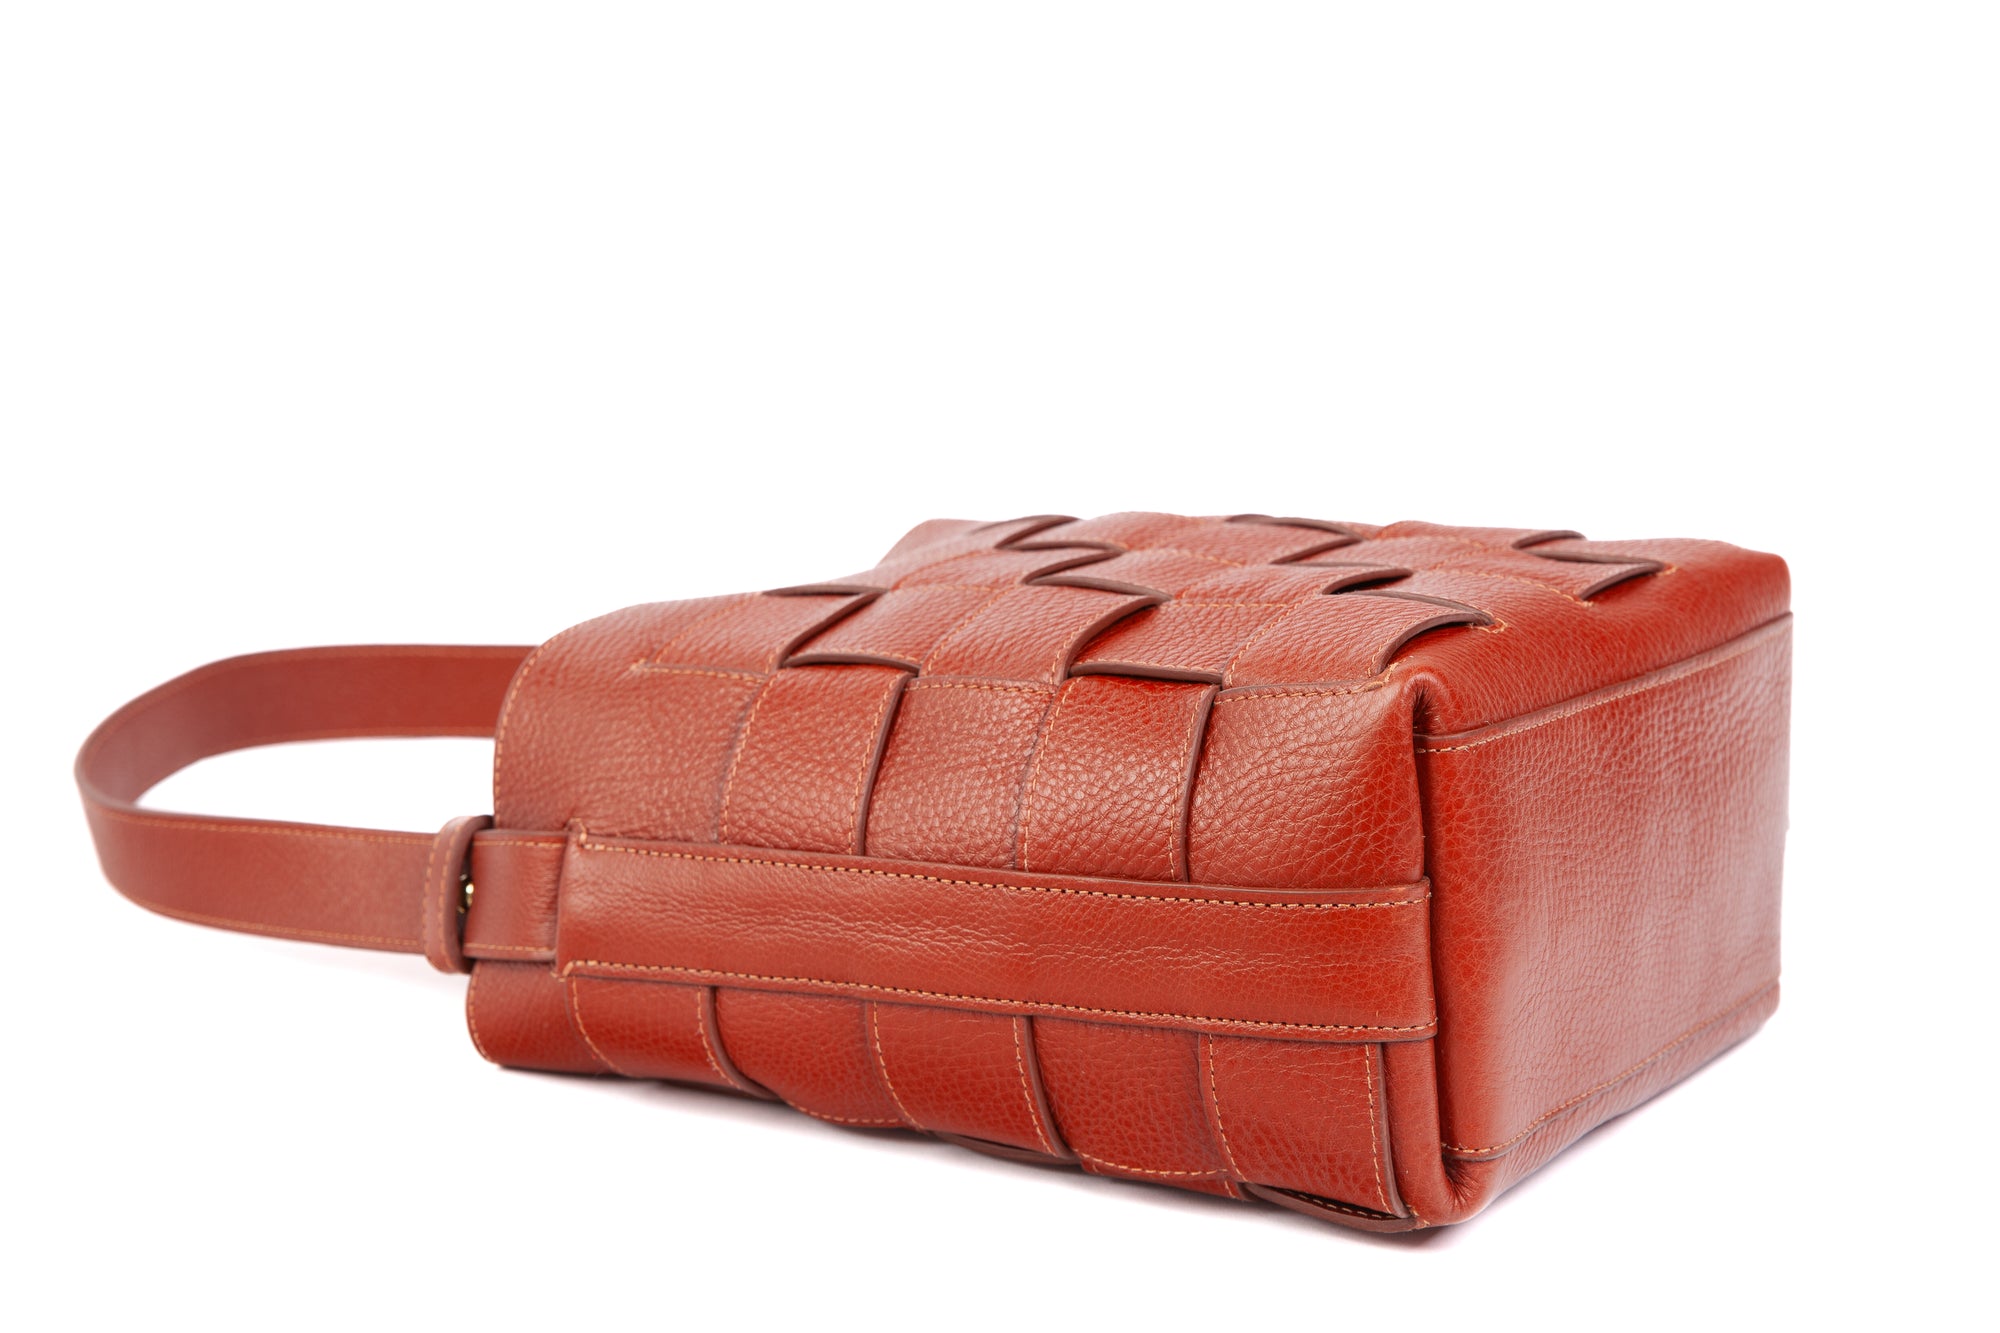 Mini Woven Leather Bucket Shoulder Bag Saddle Tan